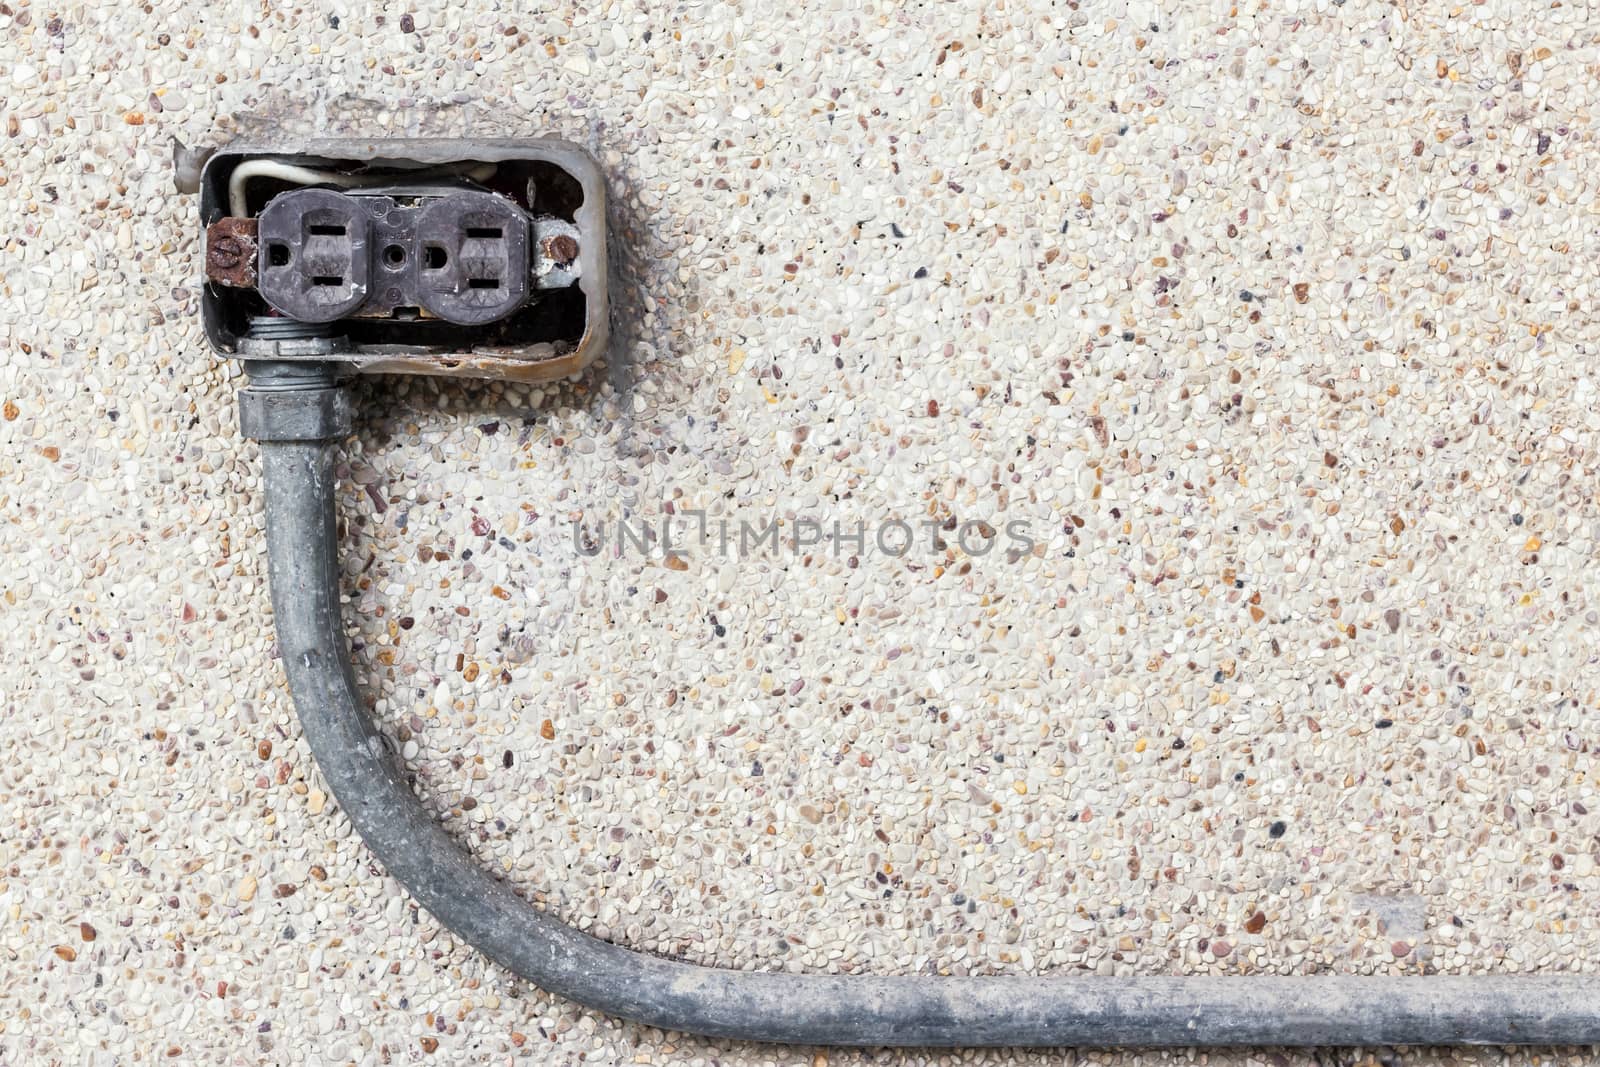 Asia plug socket on brick wall background. Risk of danger.